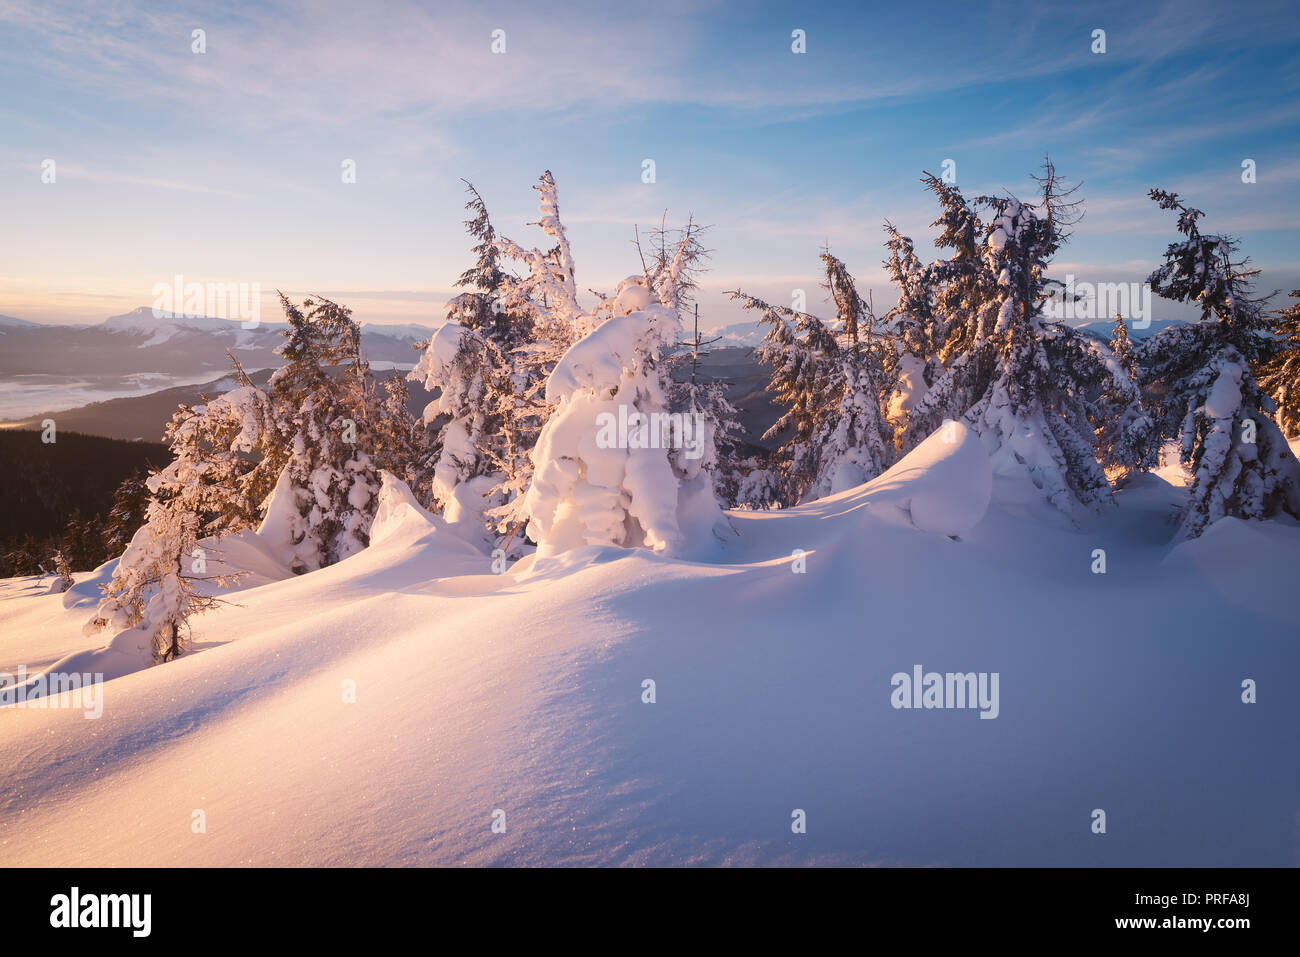 Tannen unter dem Schnee. Winterlandschaft. Morgens in den Bergen  Stockfotografie - Alamy